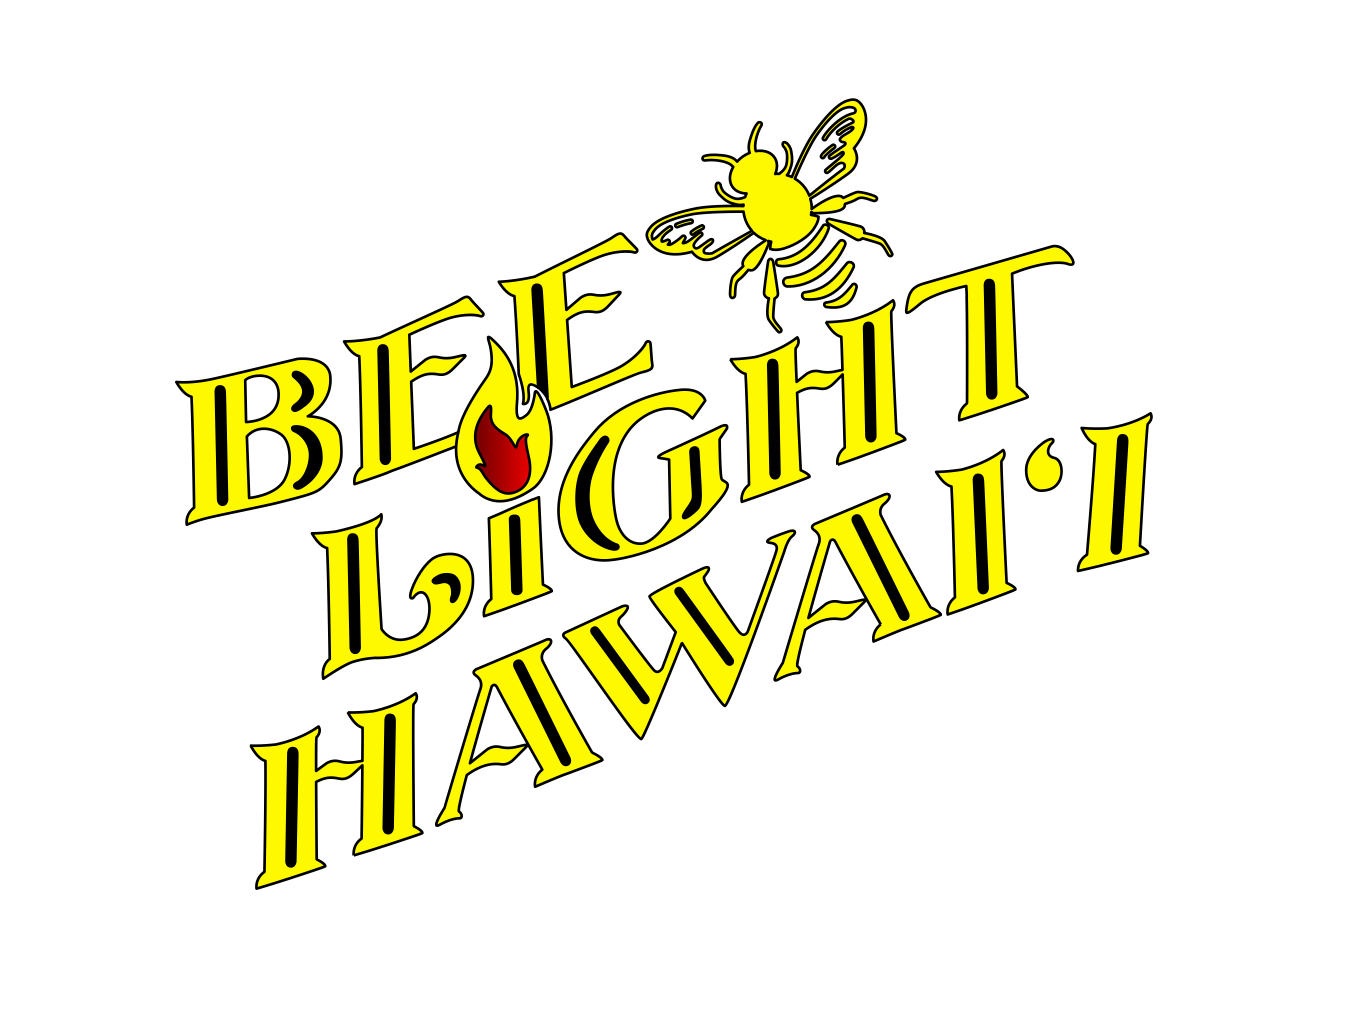 Bee Light Hawai&#39;i